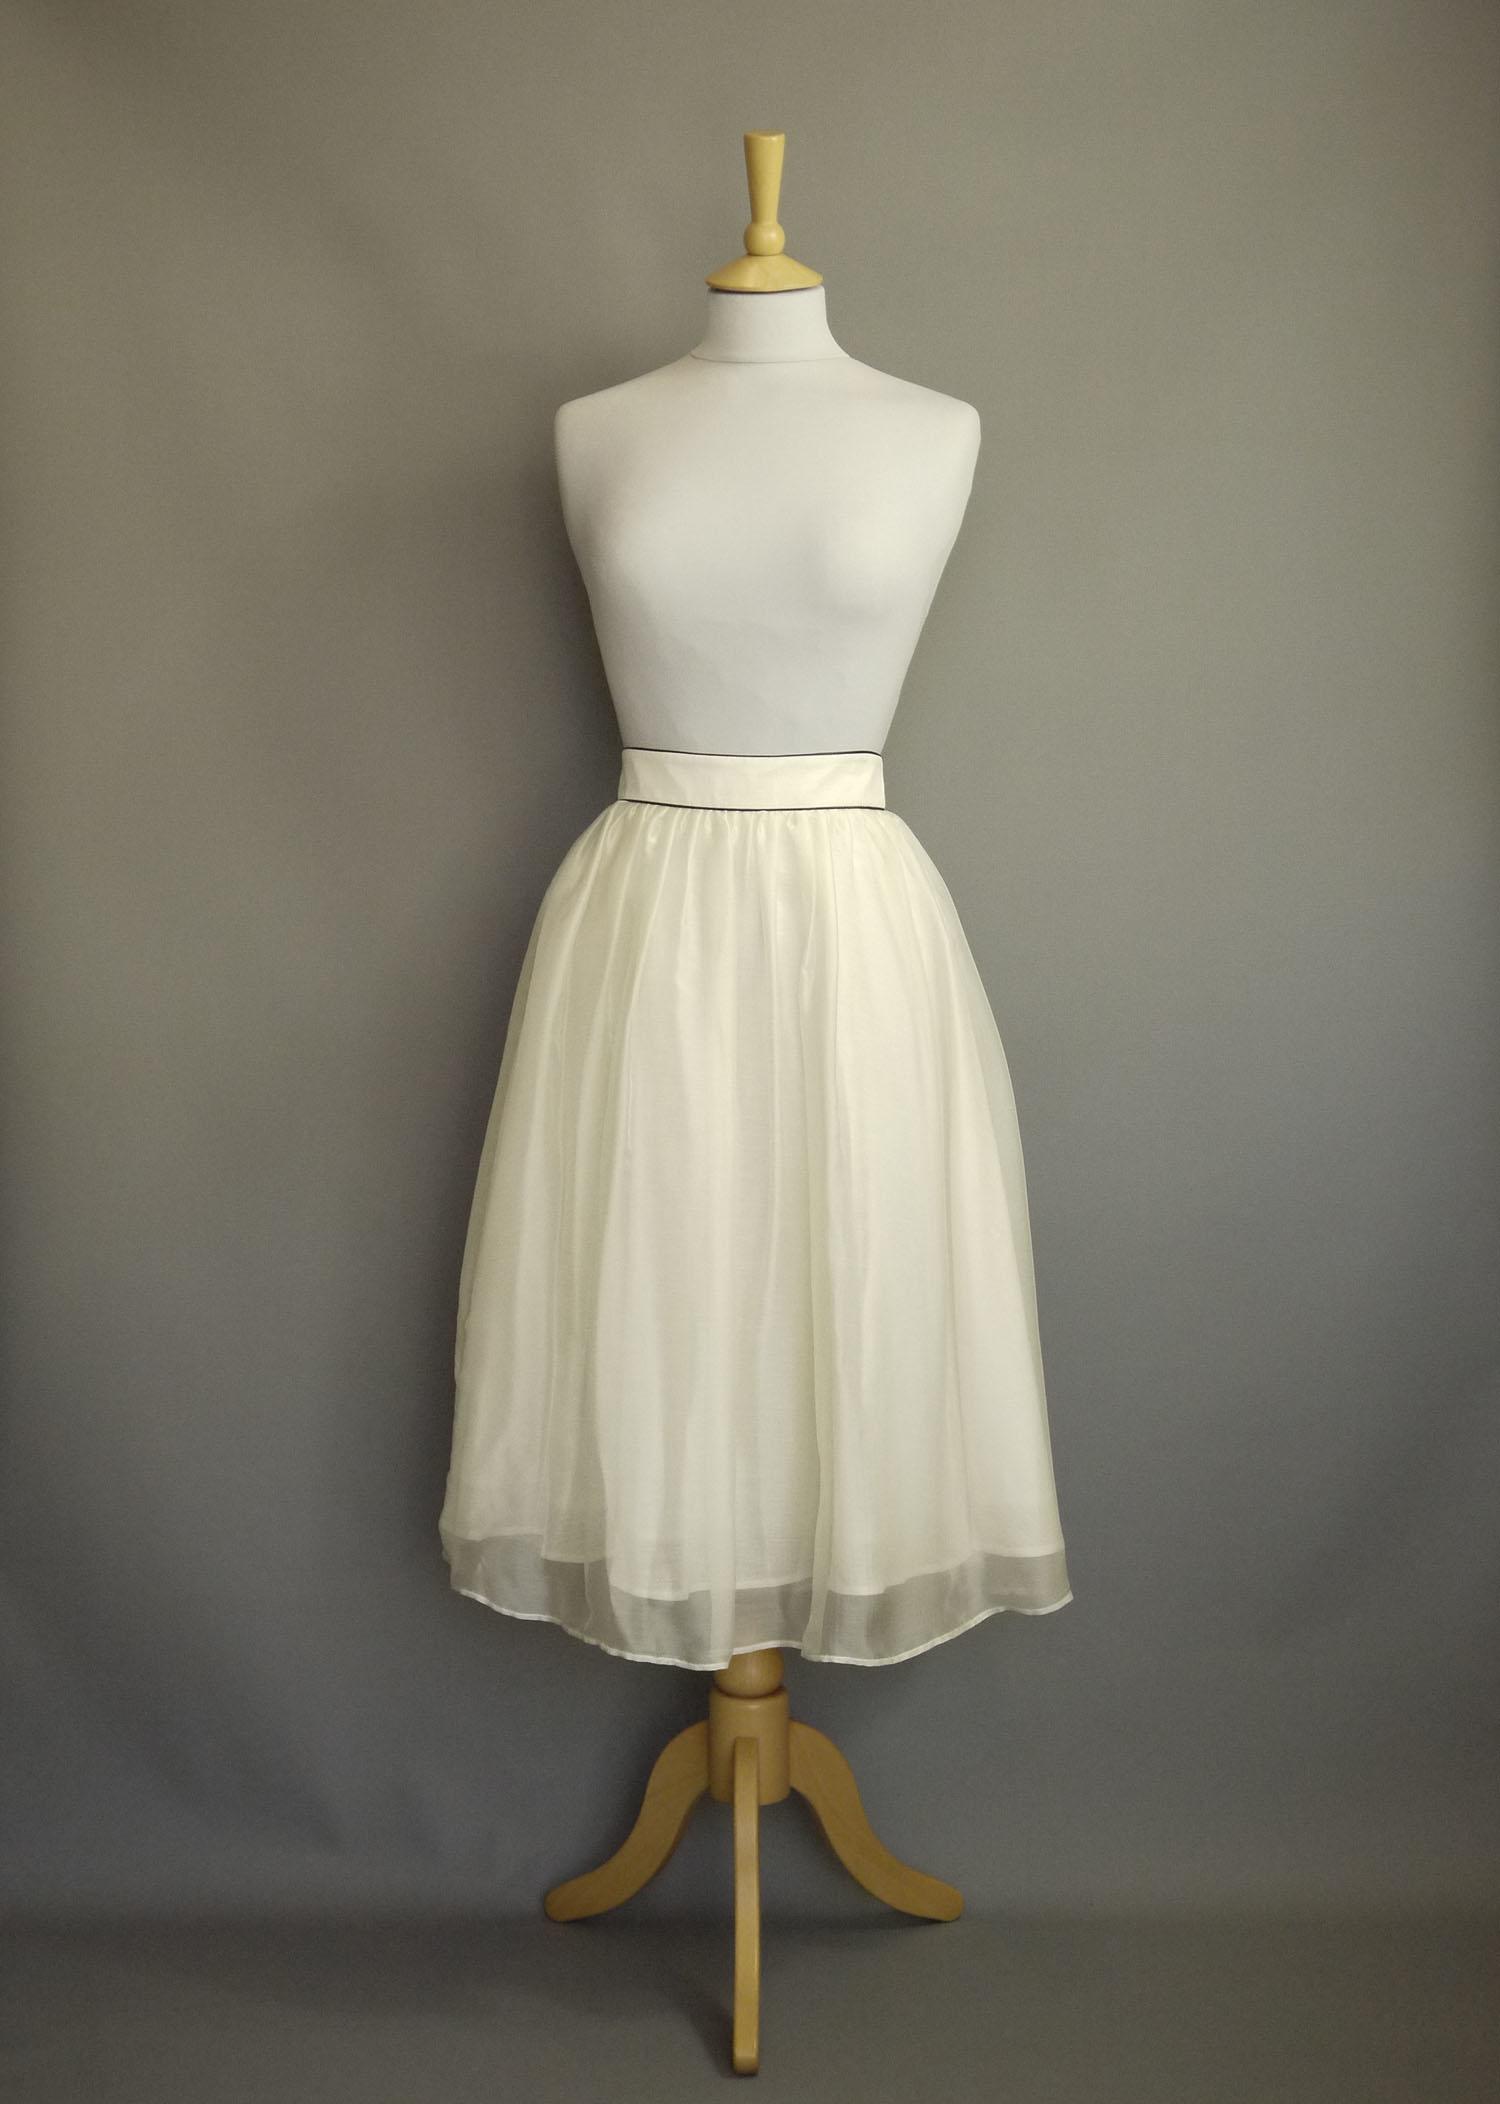 Size UK 8 - Ivory Silk Chiffon Midi Length Skirt with Black Satin Piping